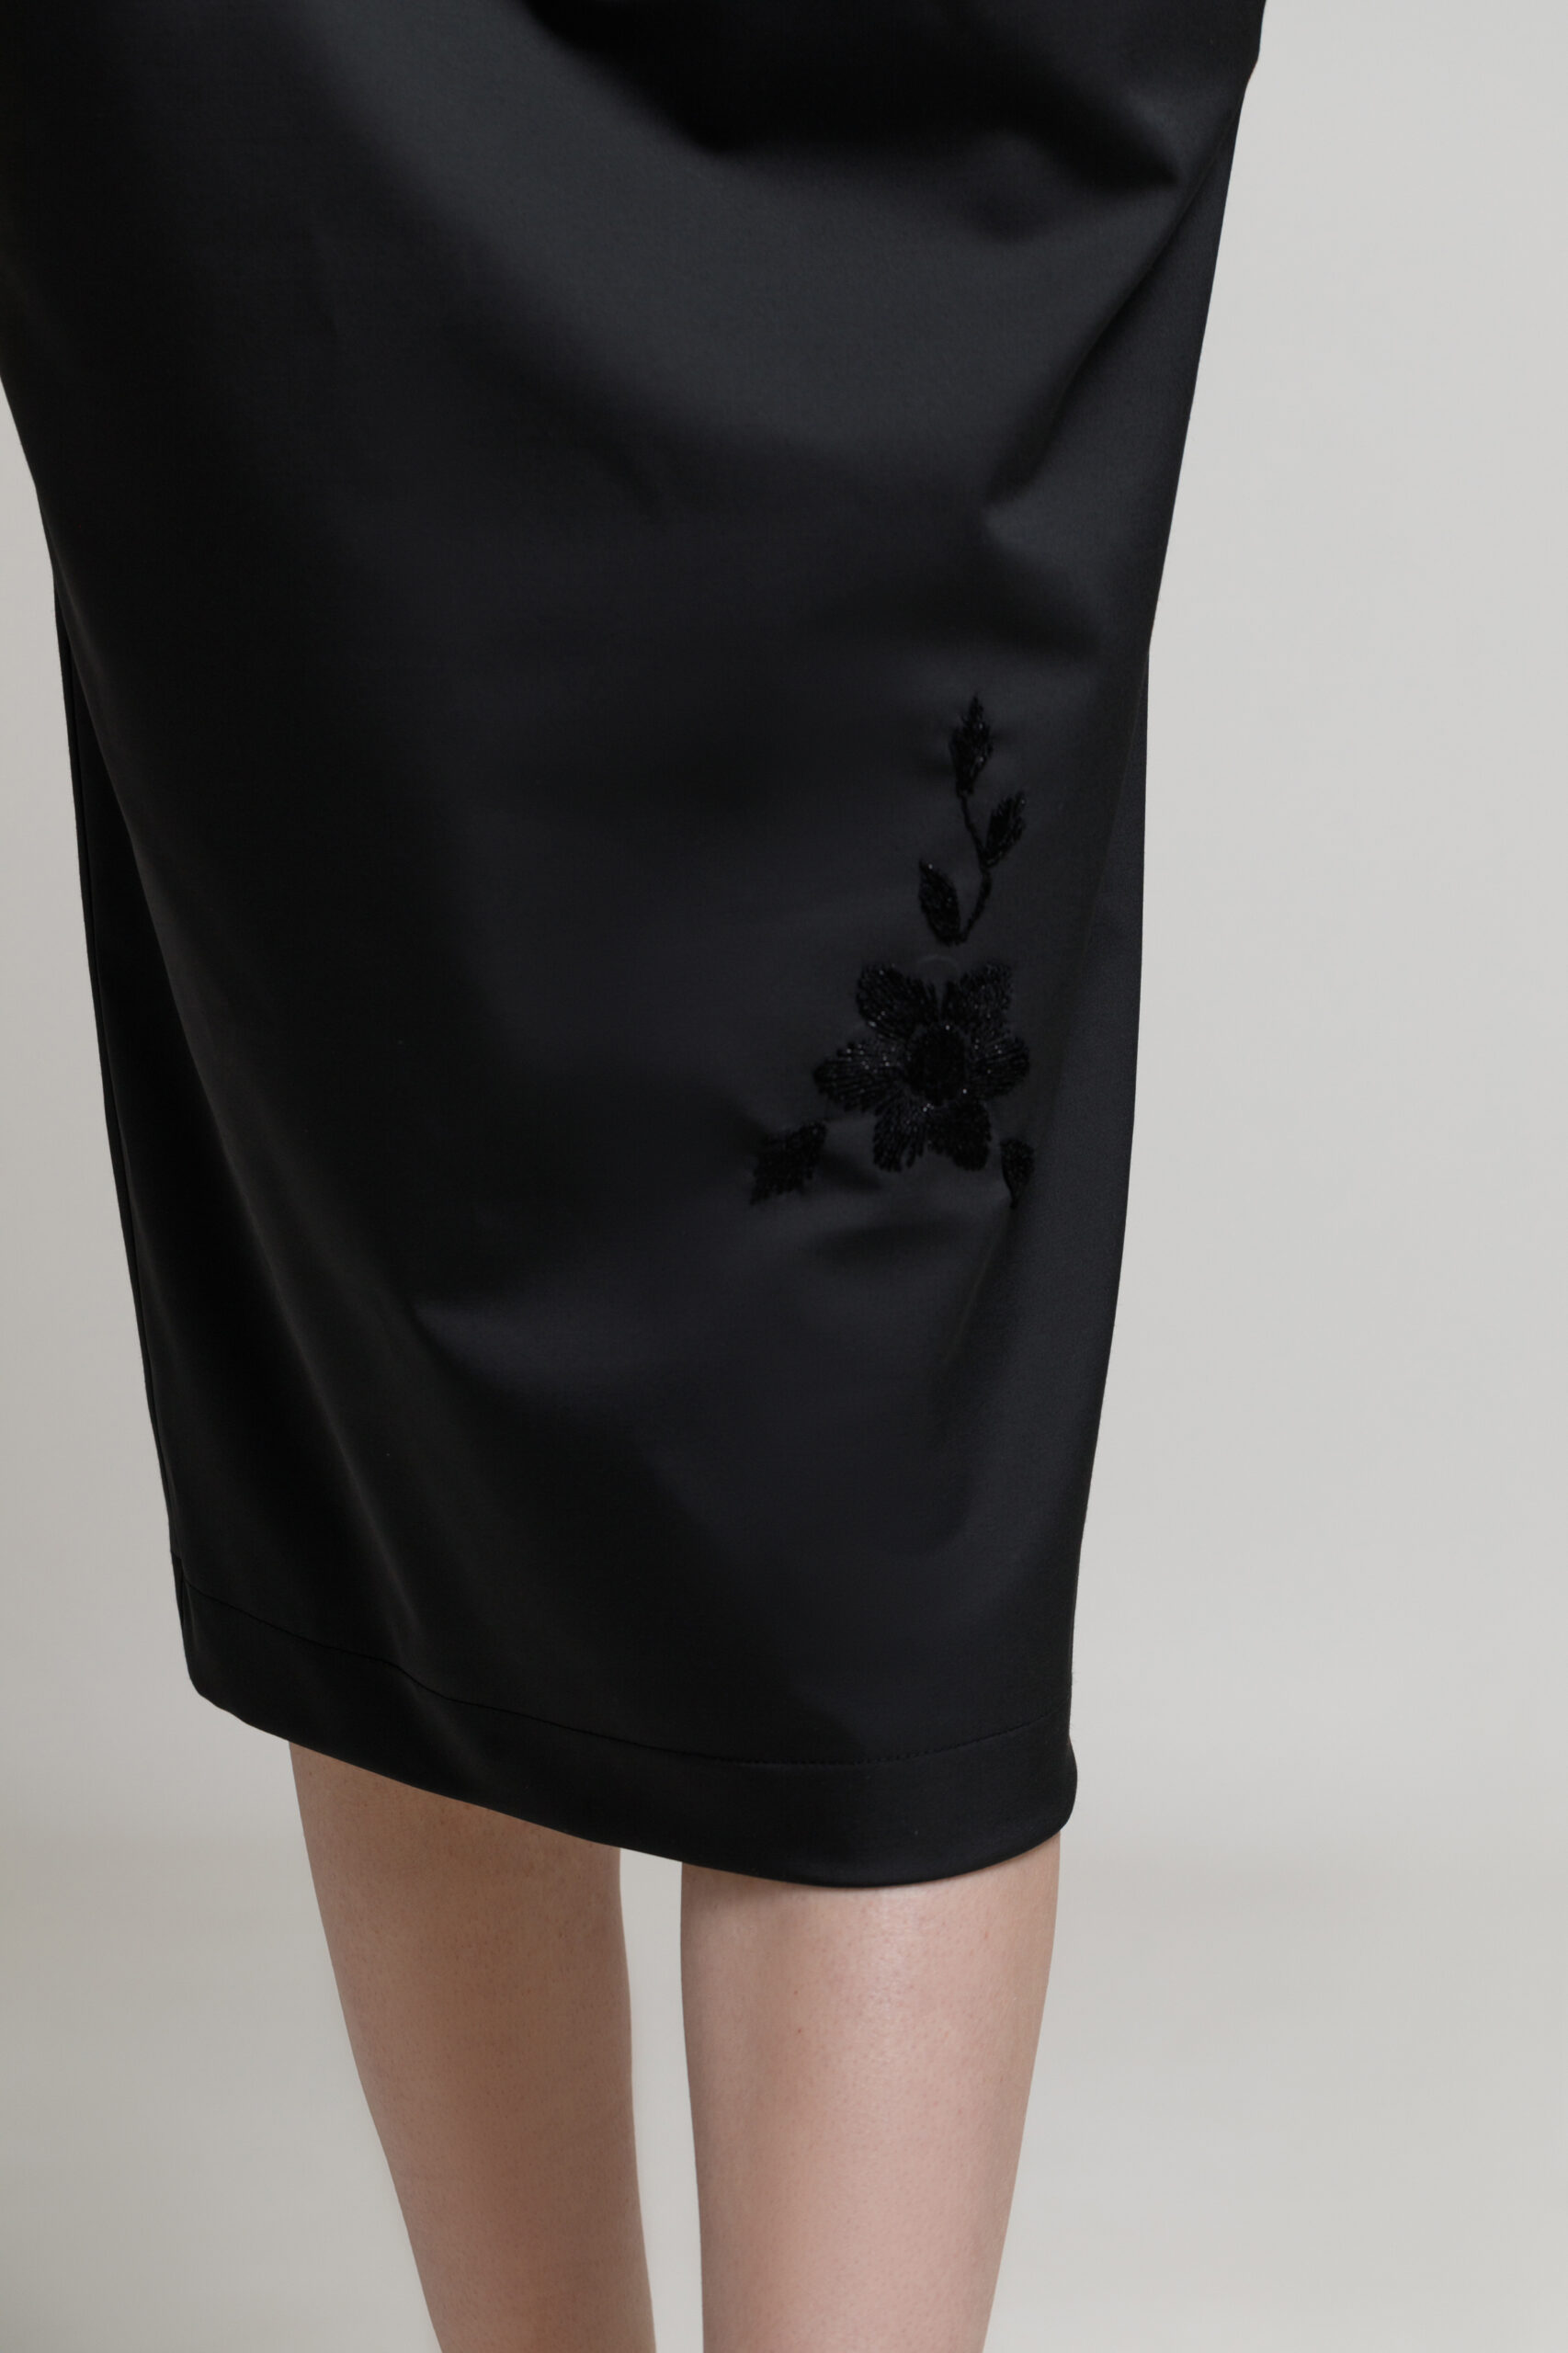 CLARE black dress with embroidery. Natural fabrics, original design, handmade embroidery